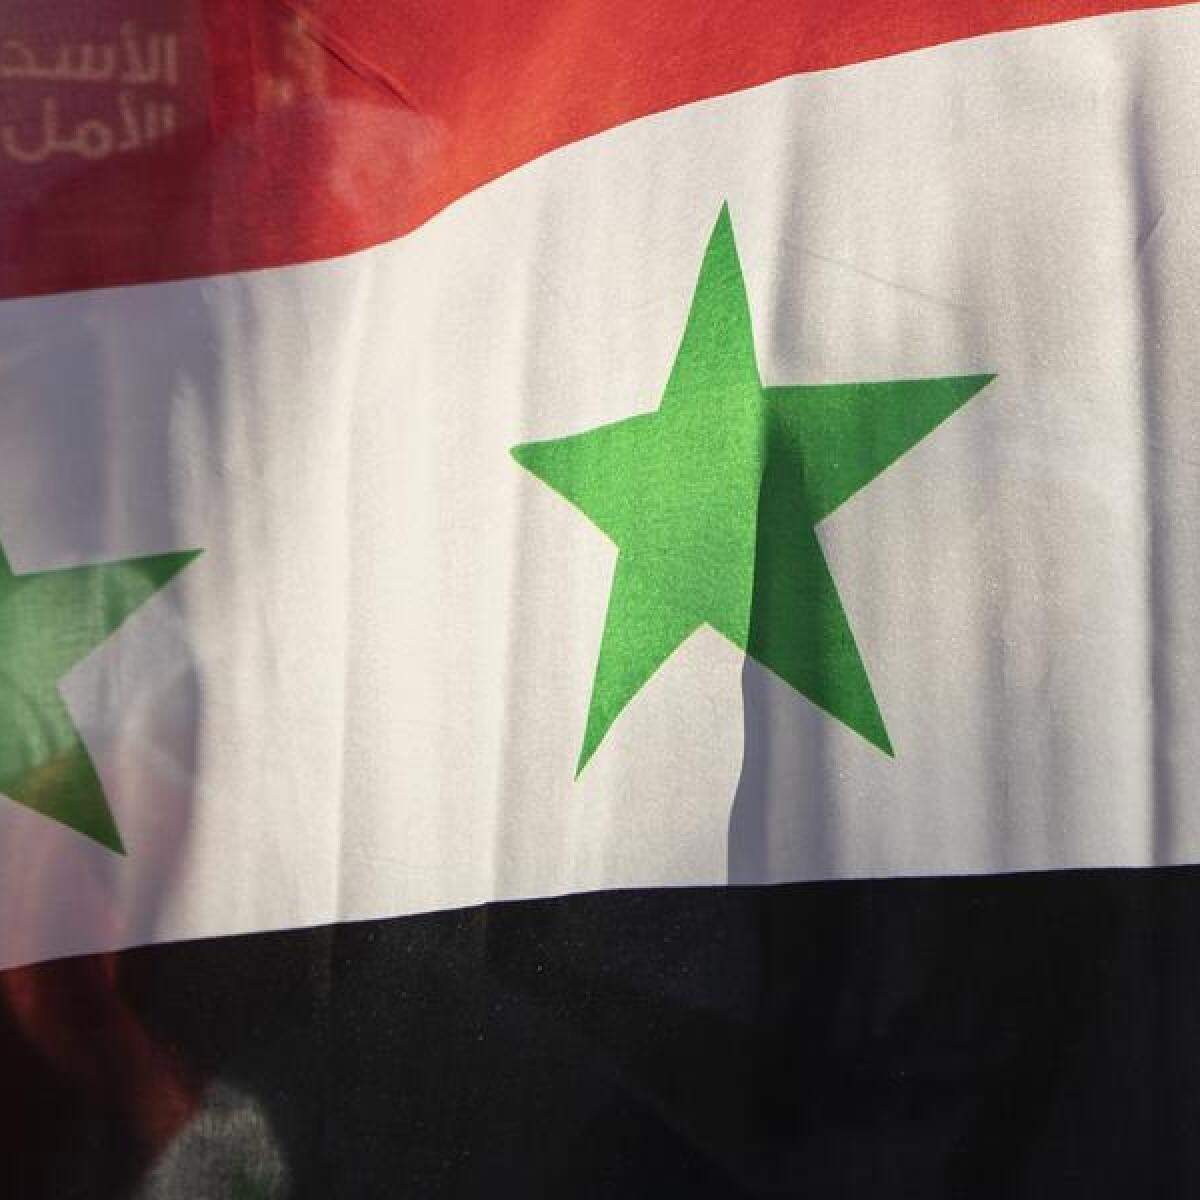 Syria flag